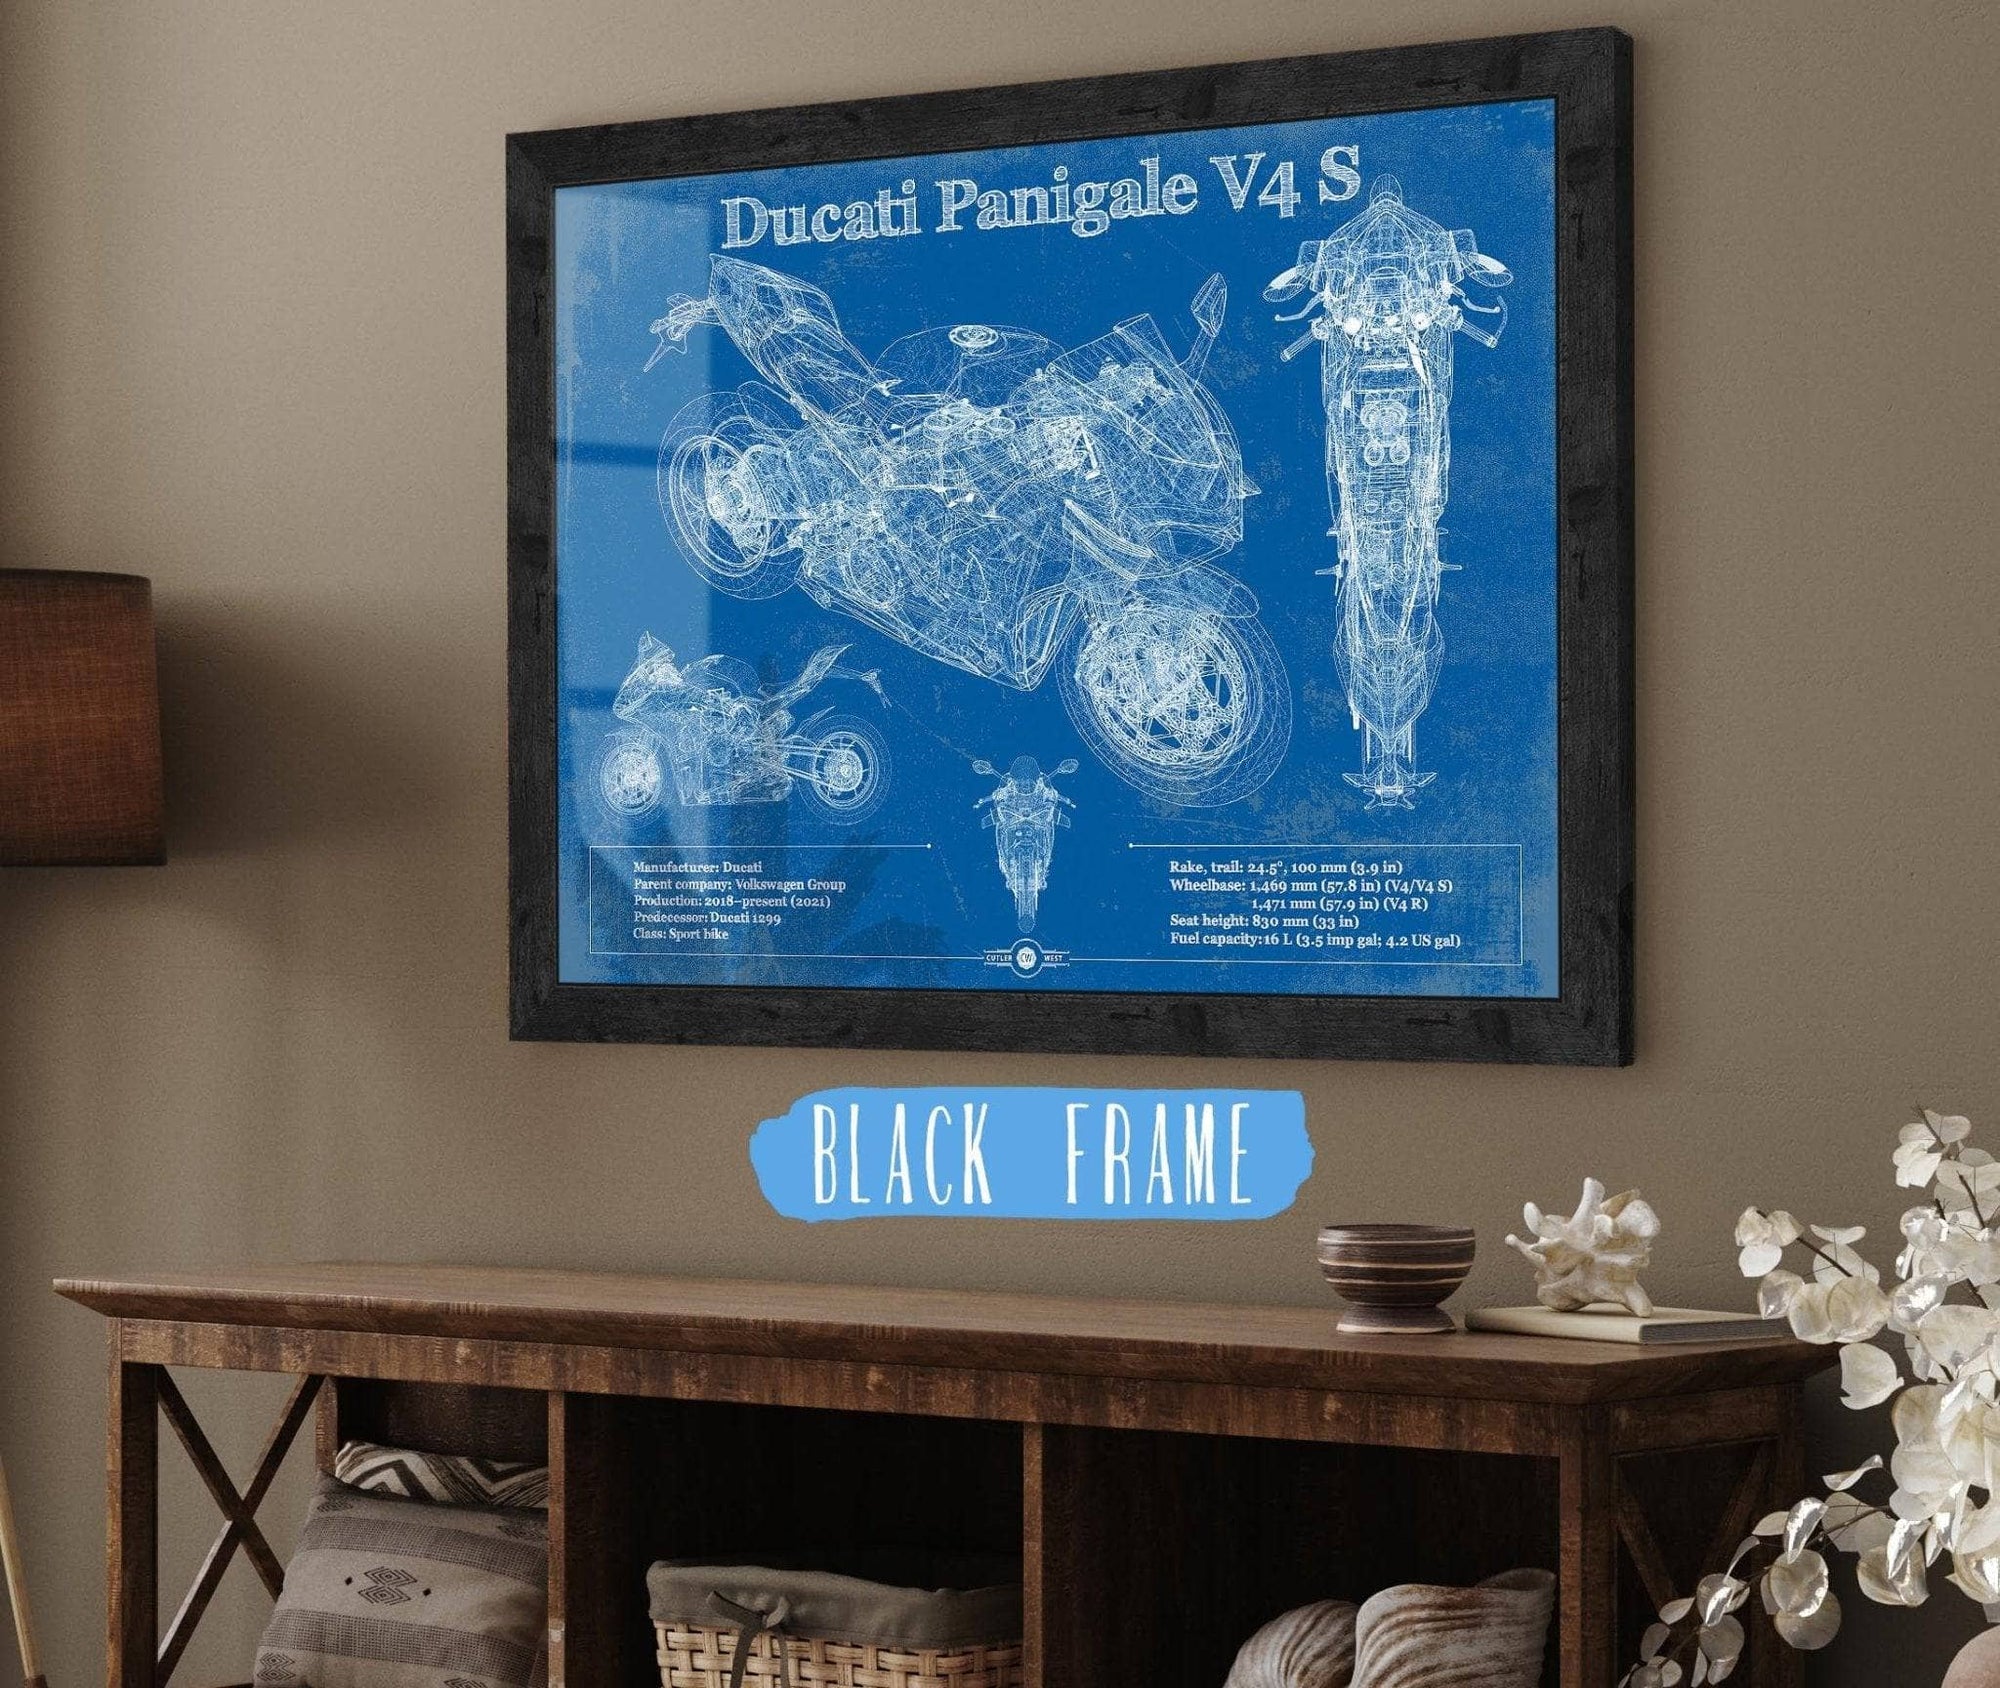 Cutler West 14" x 11" / Black Frame Ducati Streetfighter V4 2020 Blueprint Motorcycle Patent Print 845000240_61344